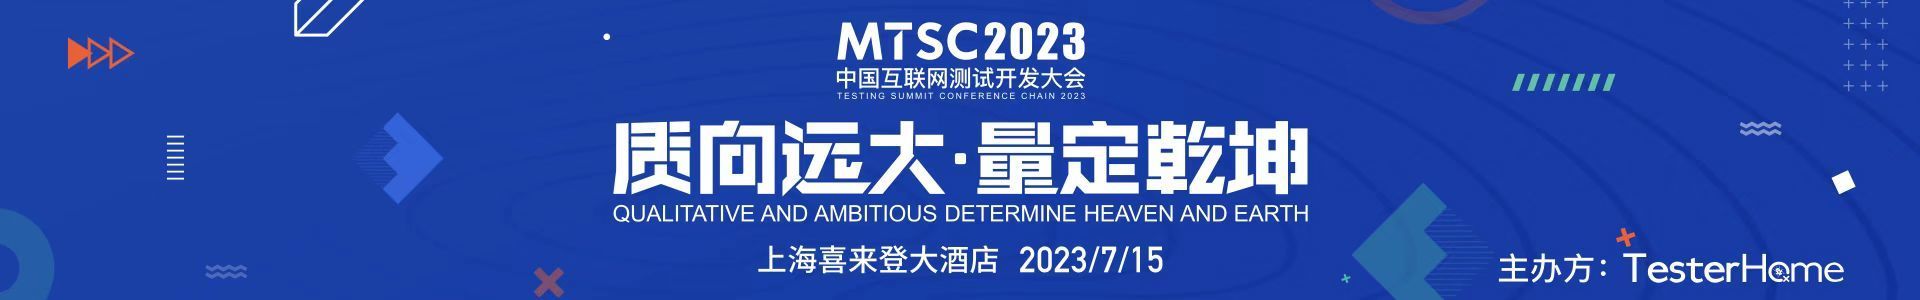 MTSC2023中國互聯網測試開發大會.-深圳站